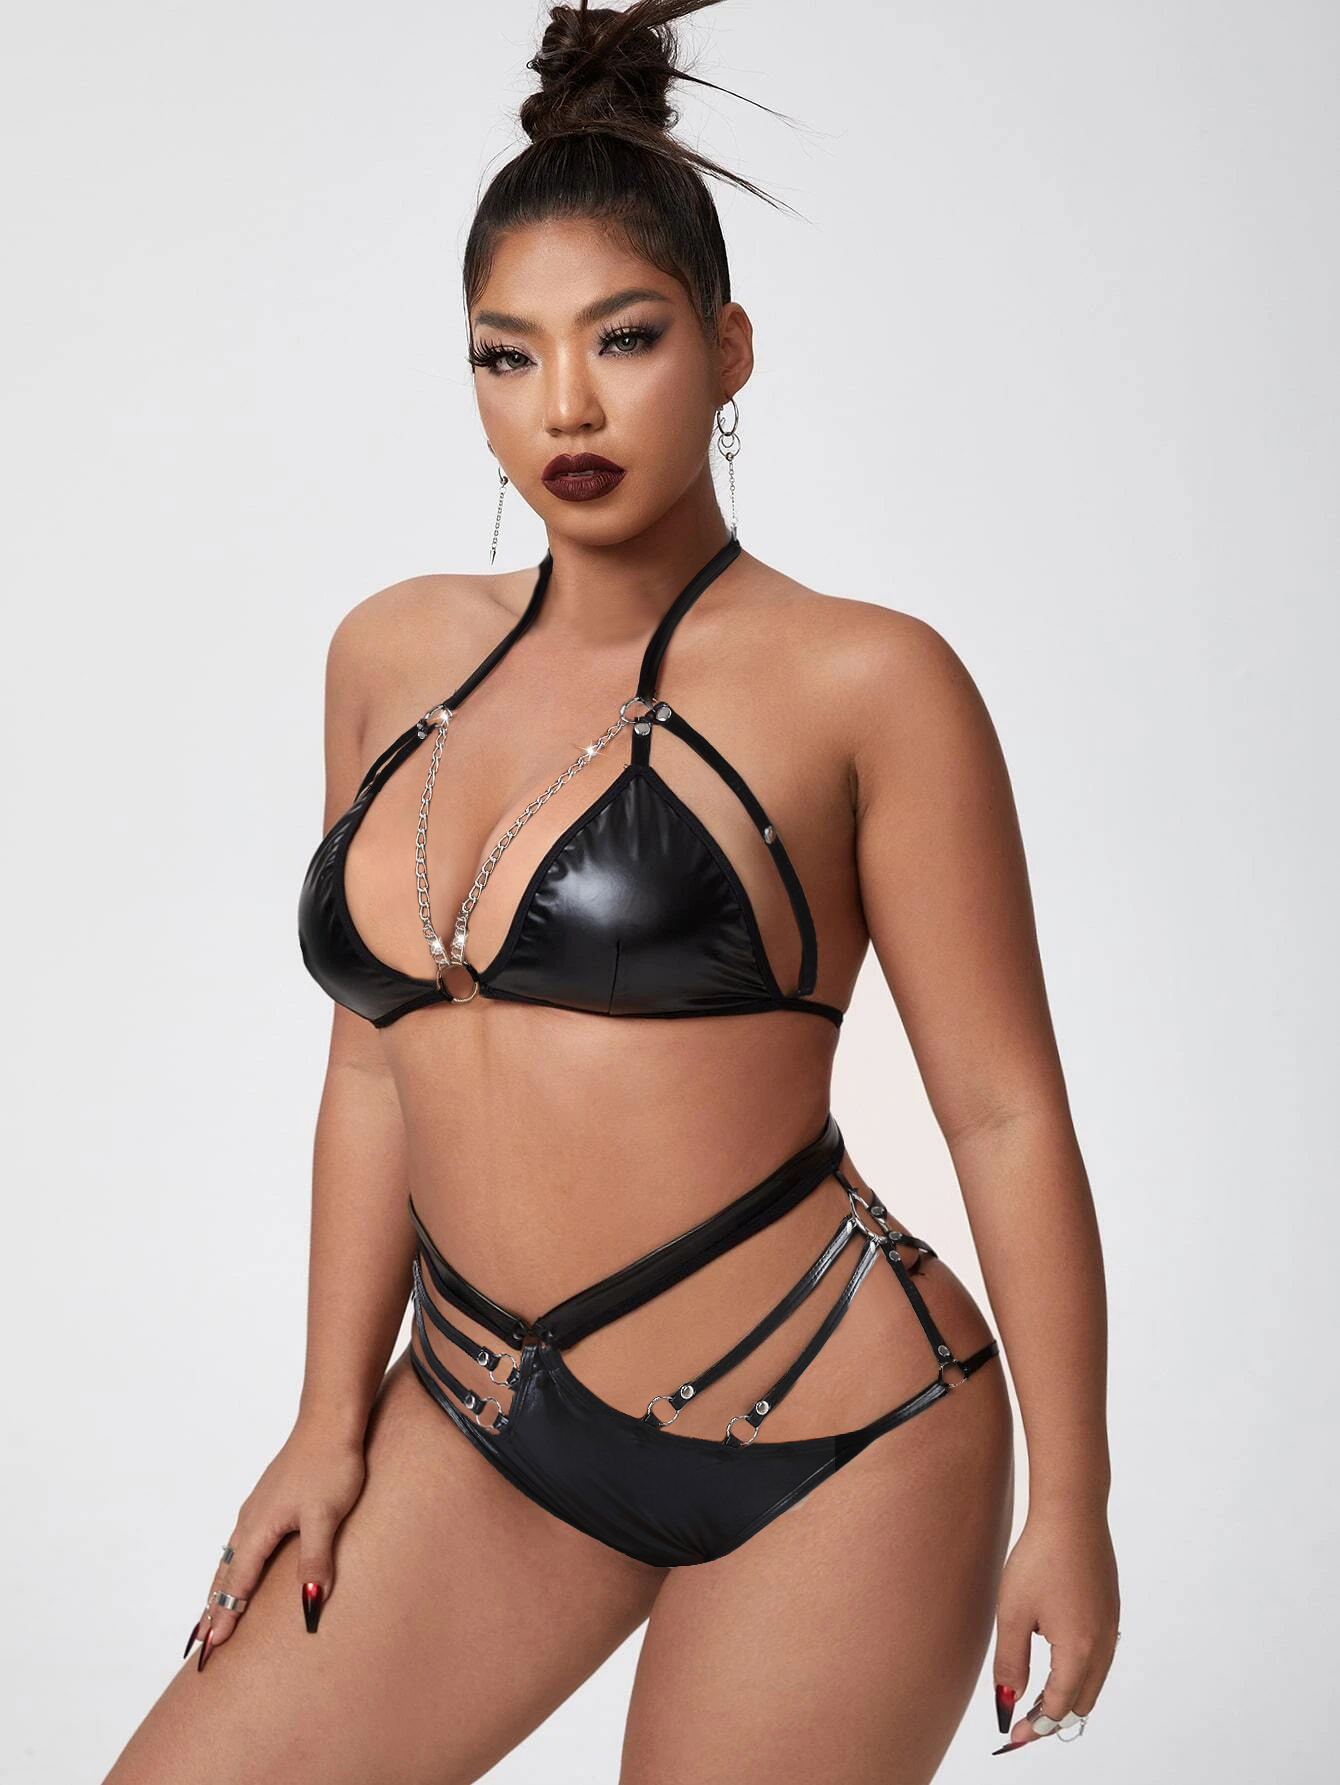 Plus Size Sexy Erotic Leather Chain Bra and Panty Bikini Lingerie